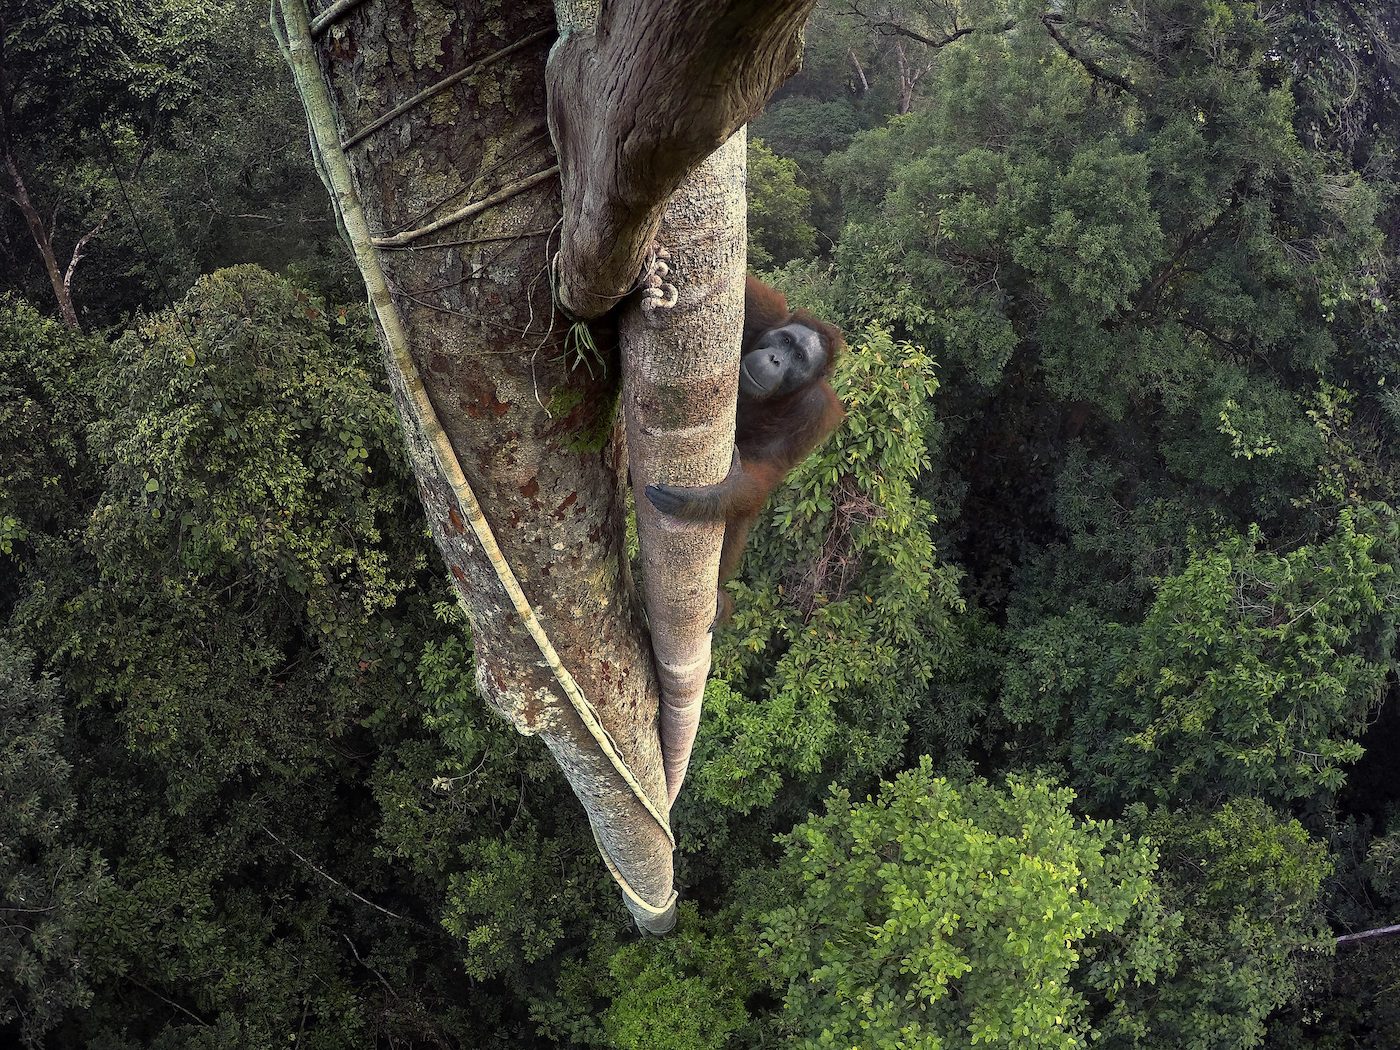 Orangután de Borneo Kalimantan, Borneo (Indonesia) | Tim Laman / 'National Geographic'